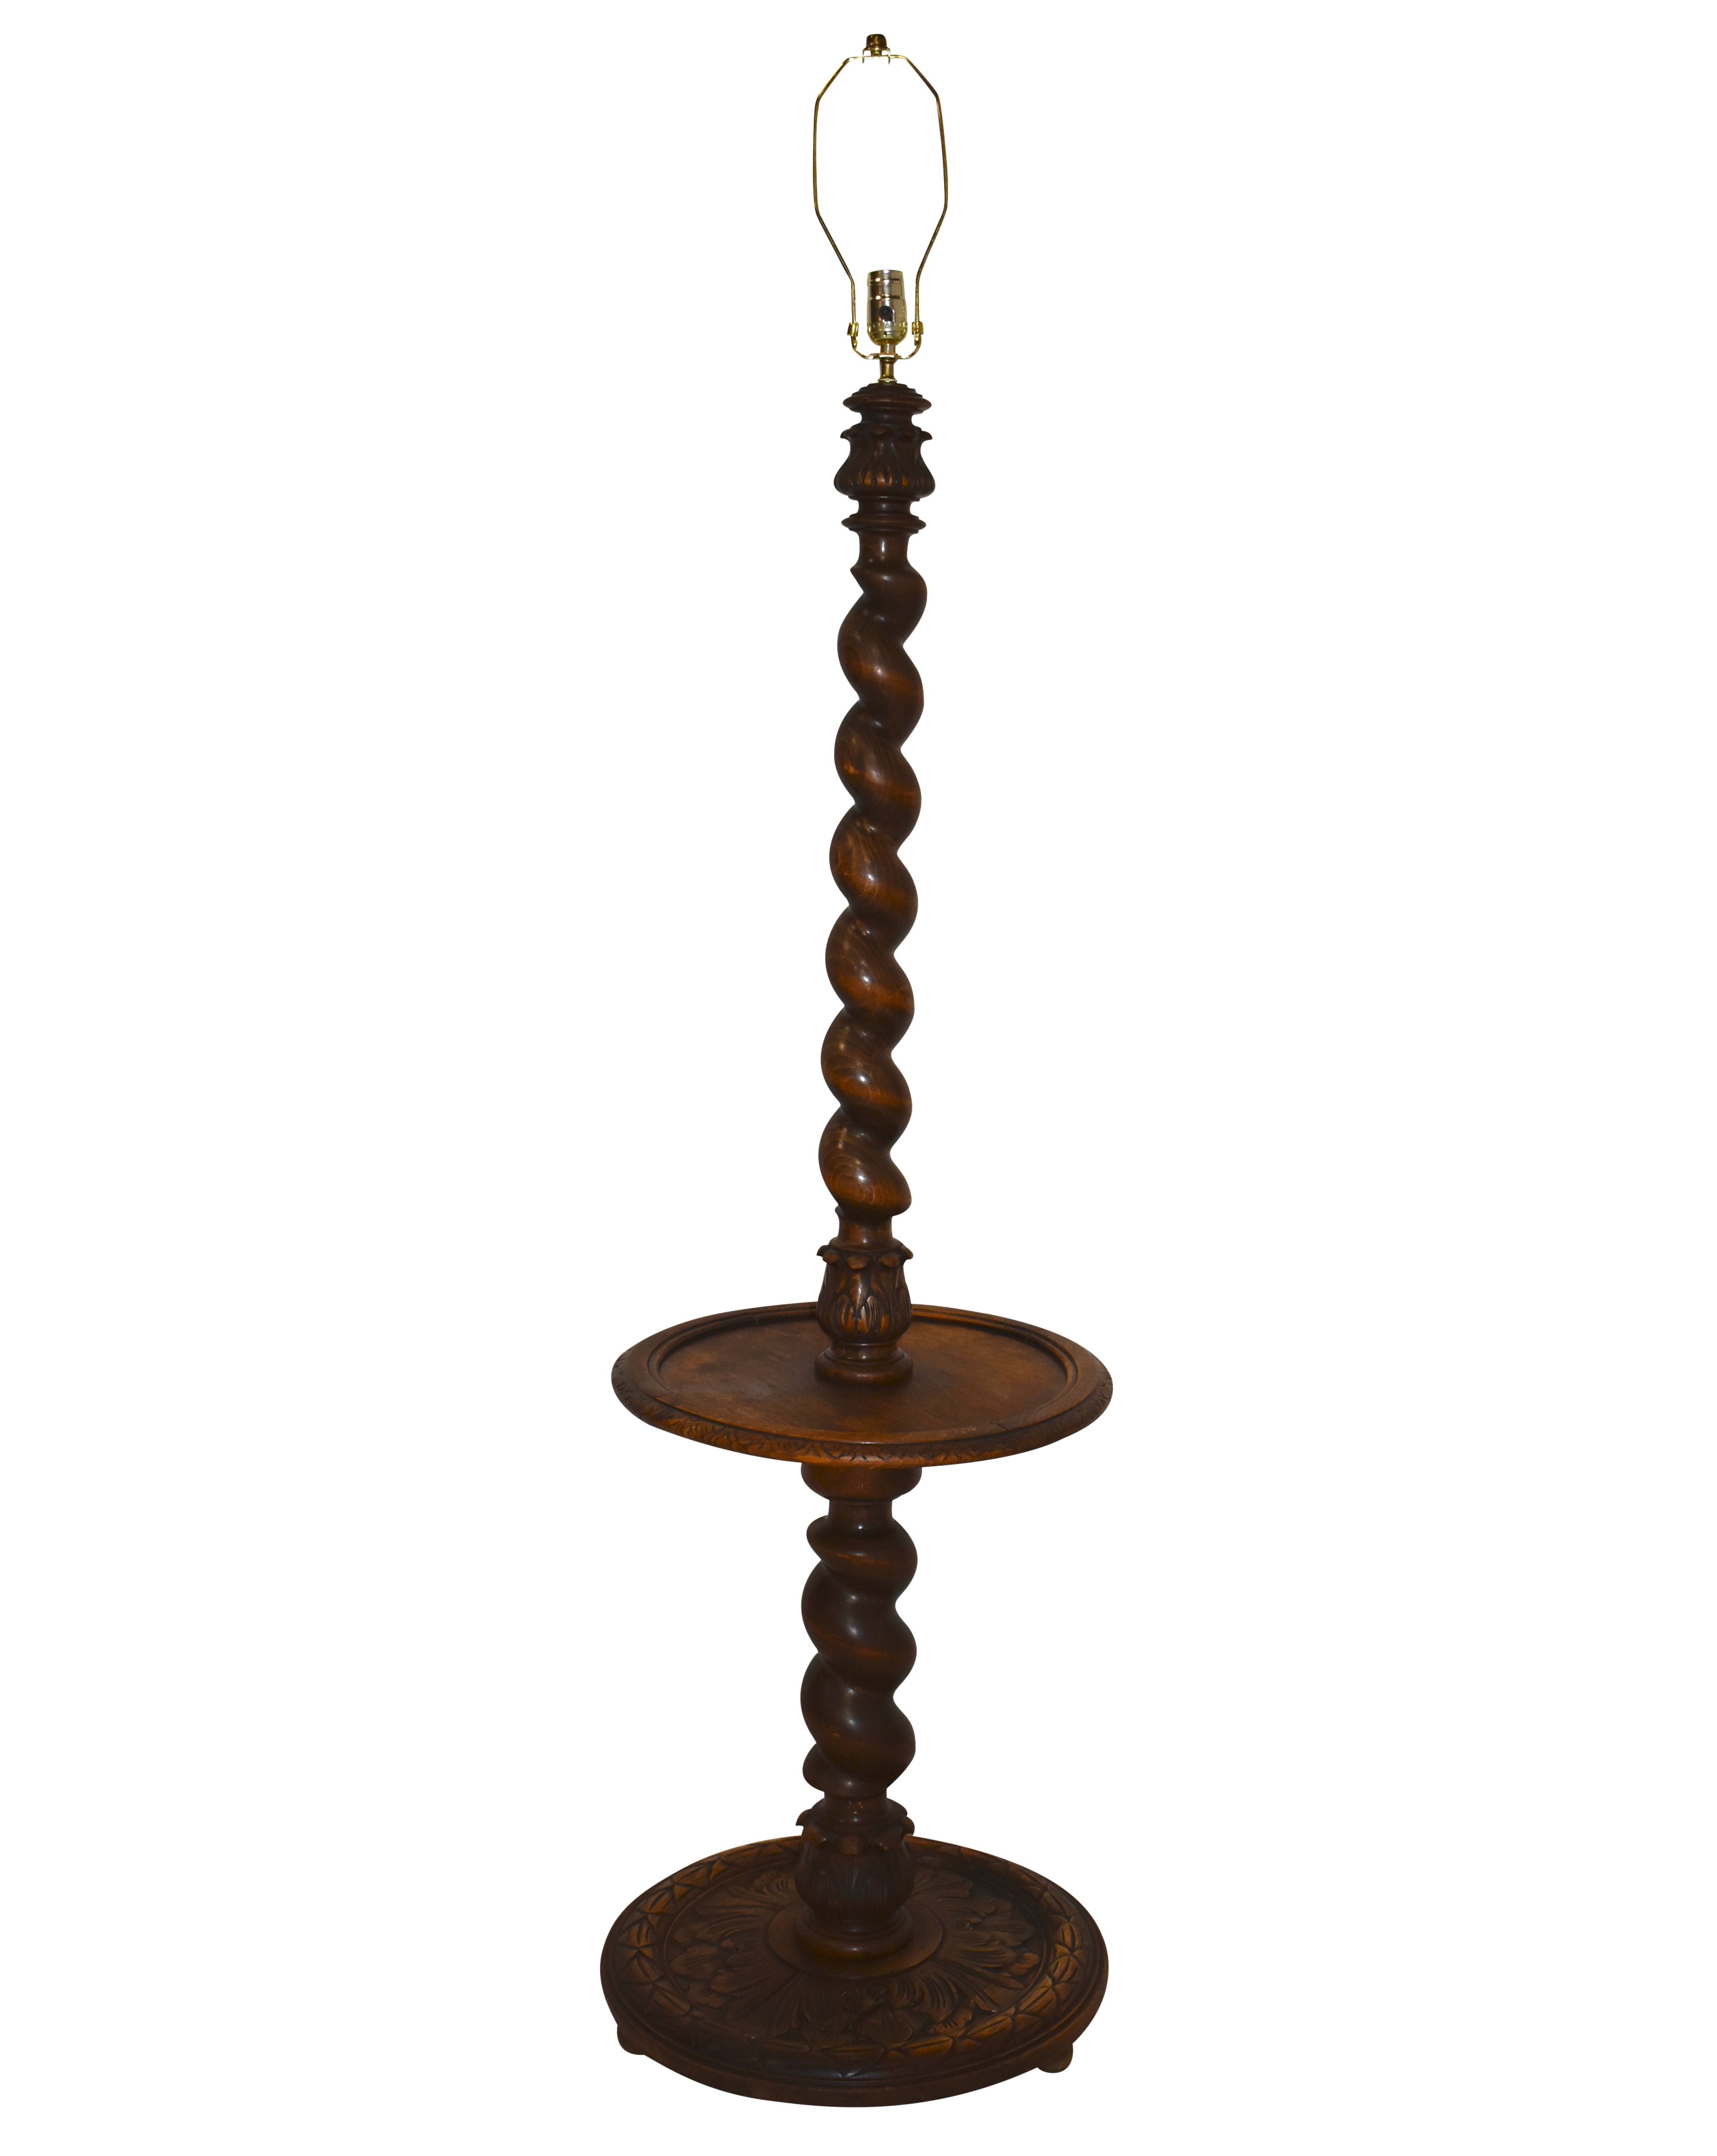 Carved Oak Floor Lamp with Barley Twist Pedestal